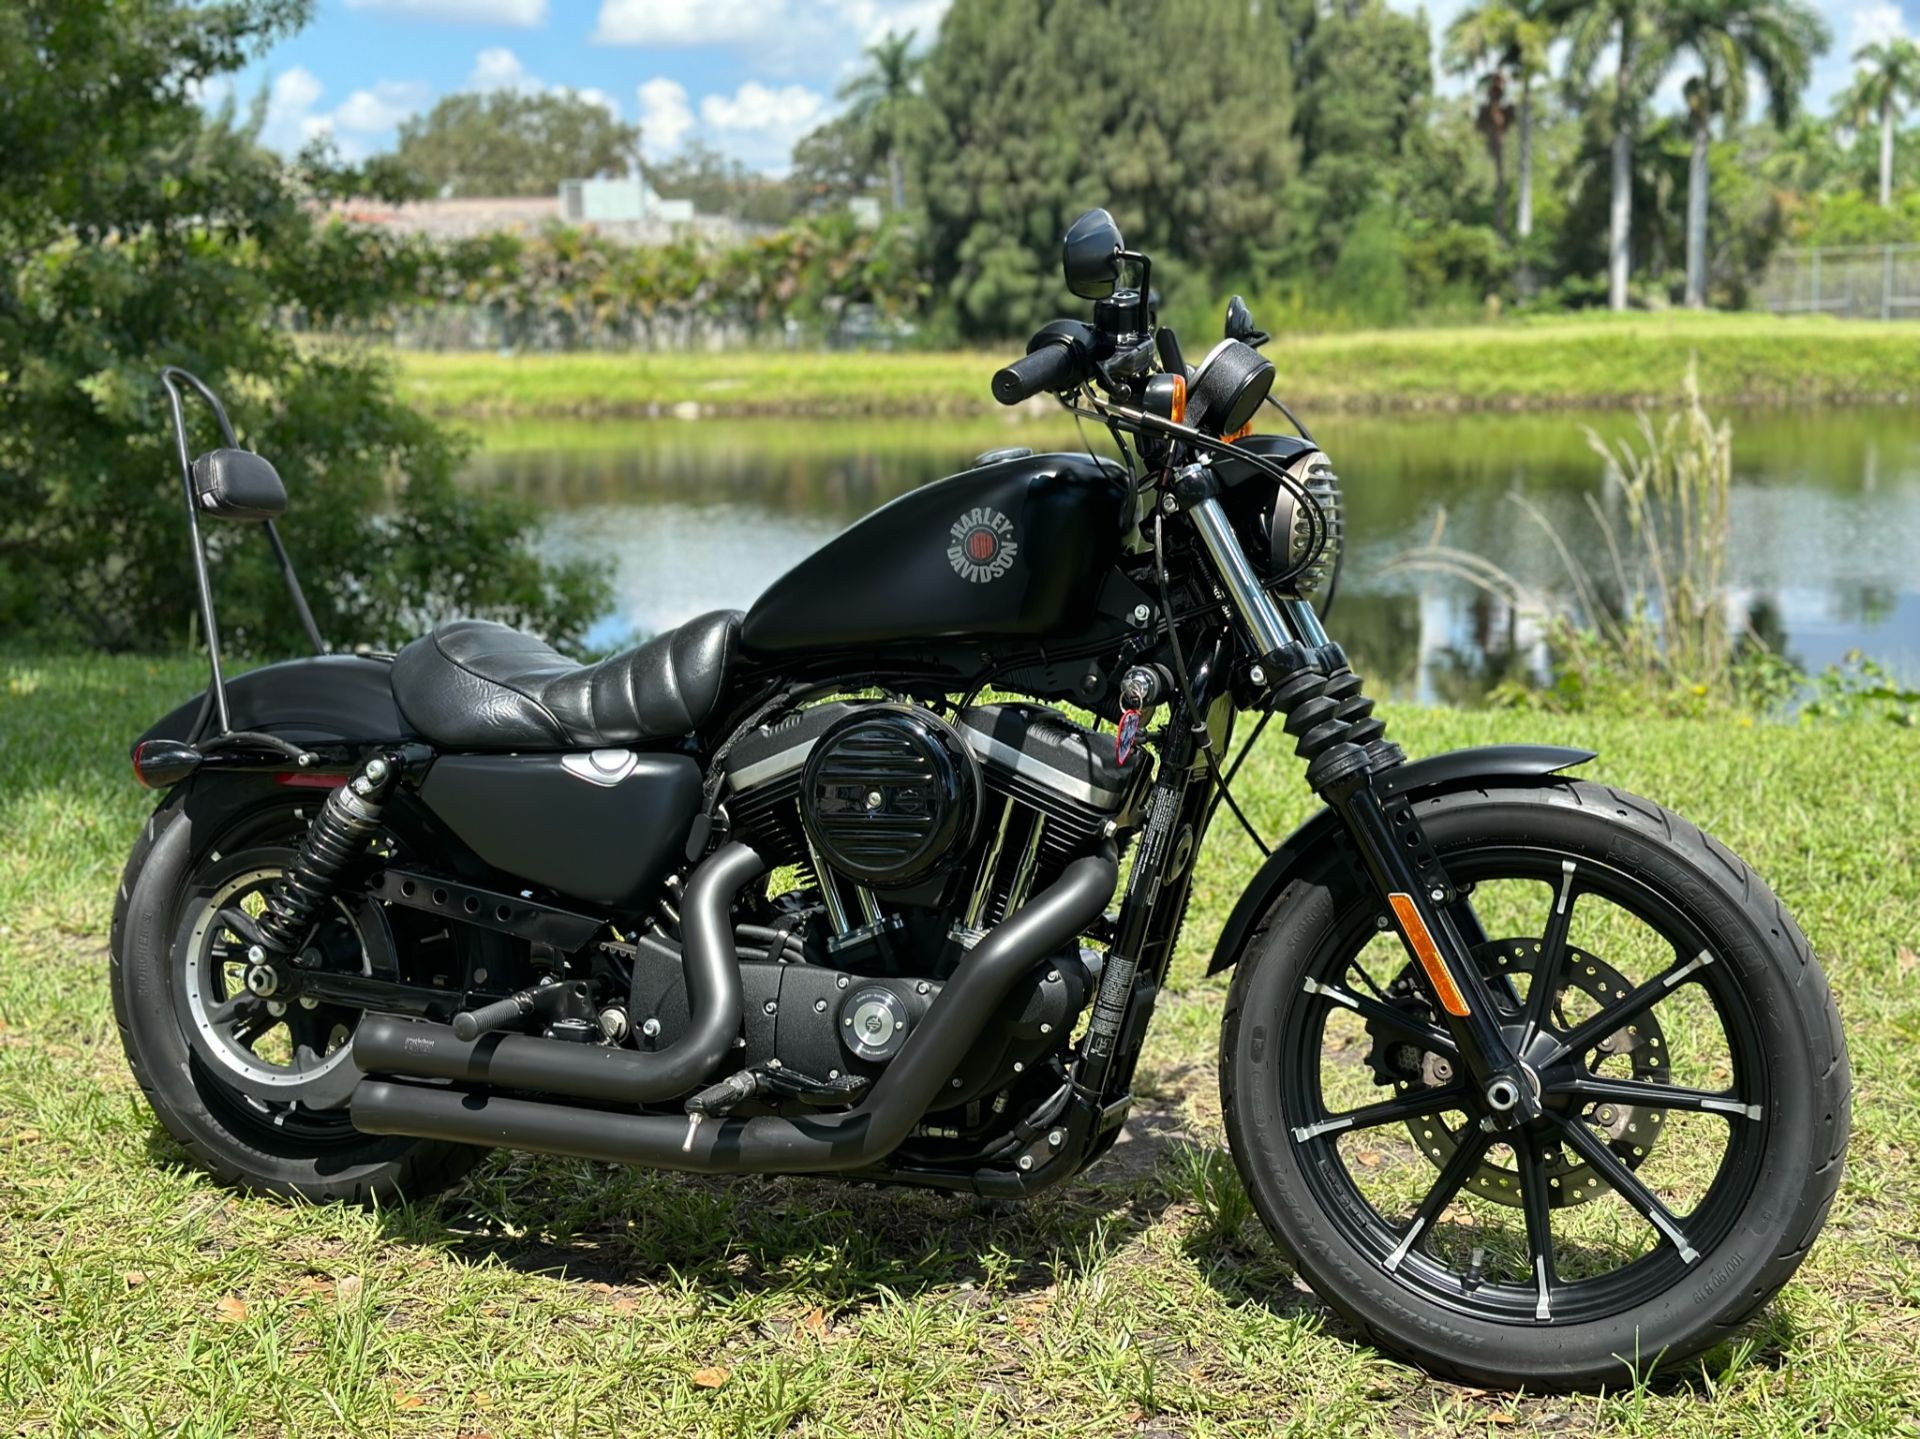 2019 Harley-Davidson Iron 883™ in North Miami Beach, Florida - Photo 1